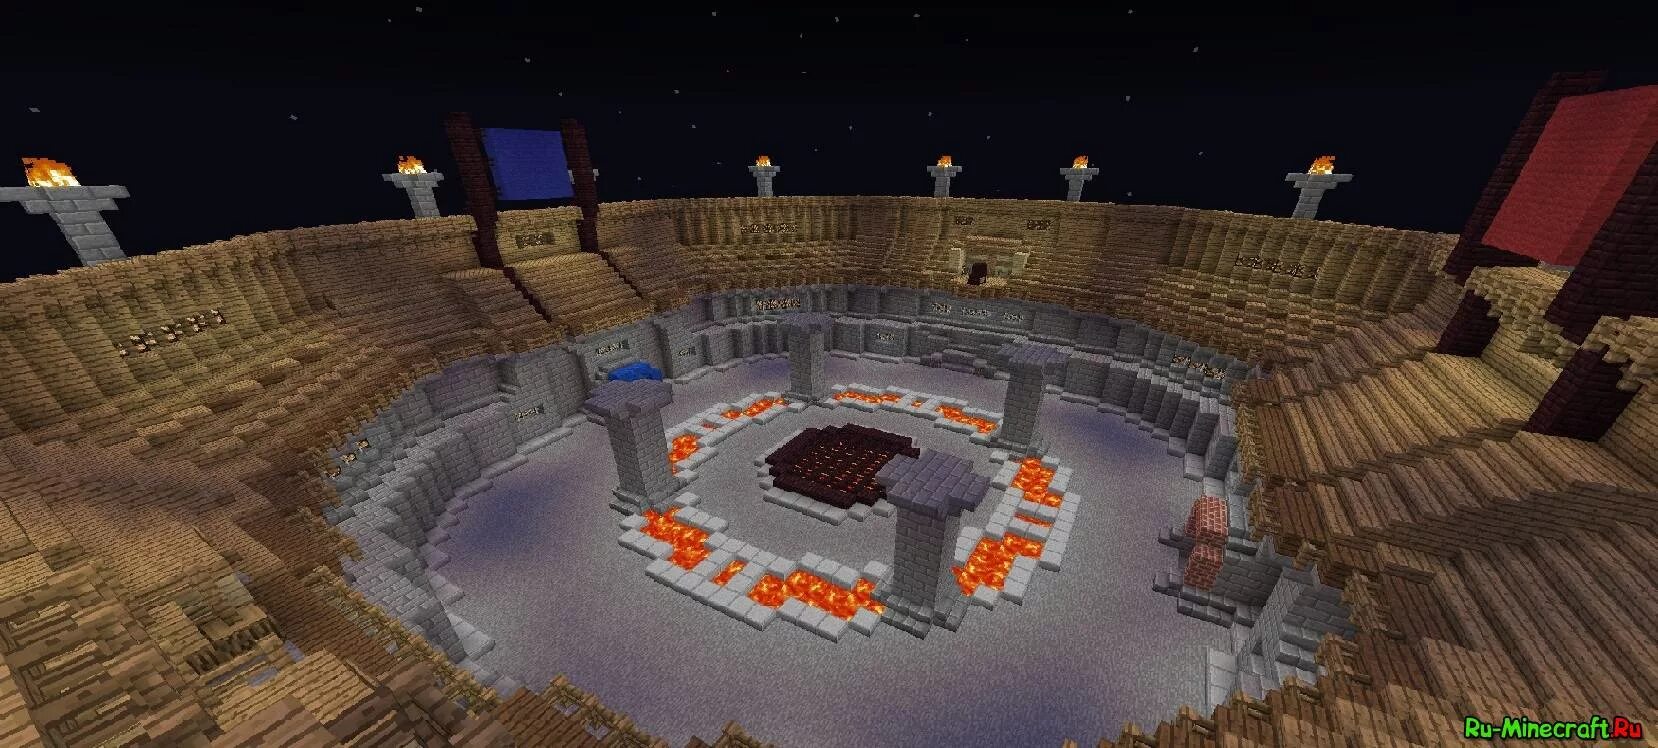 Minecraft arena